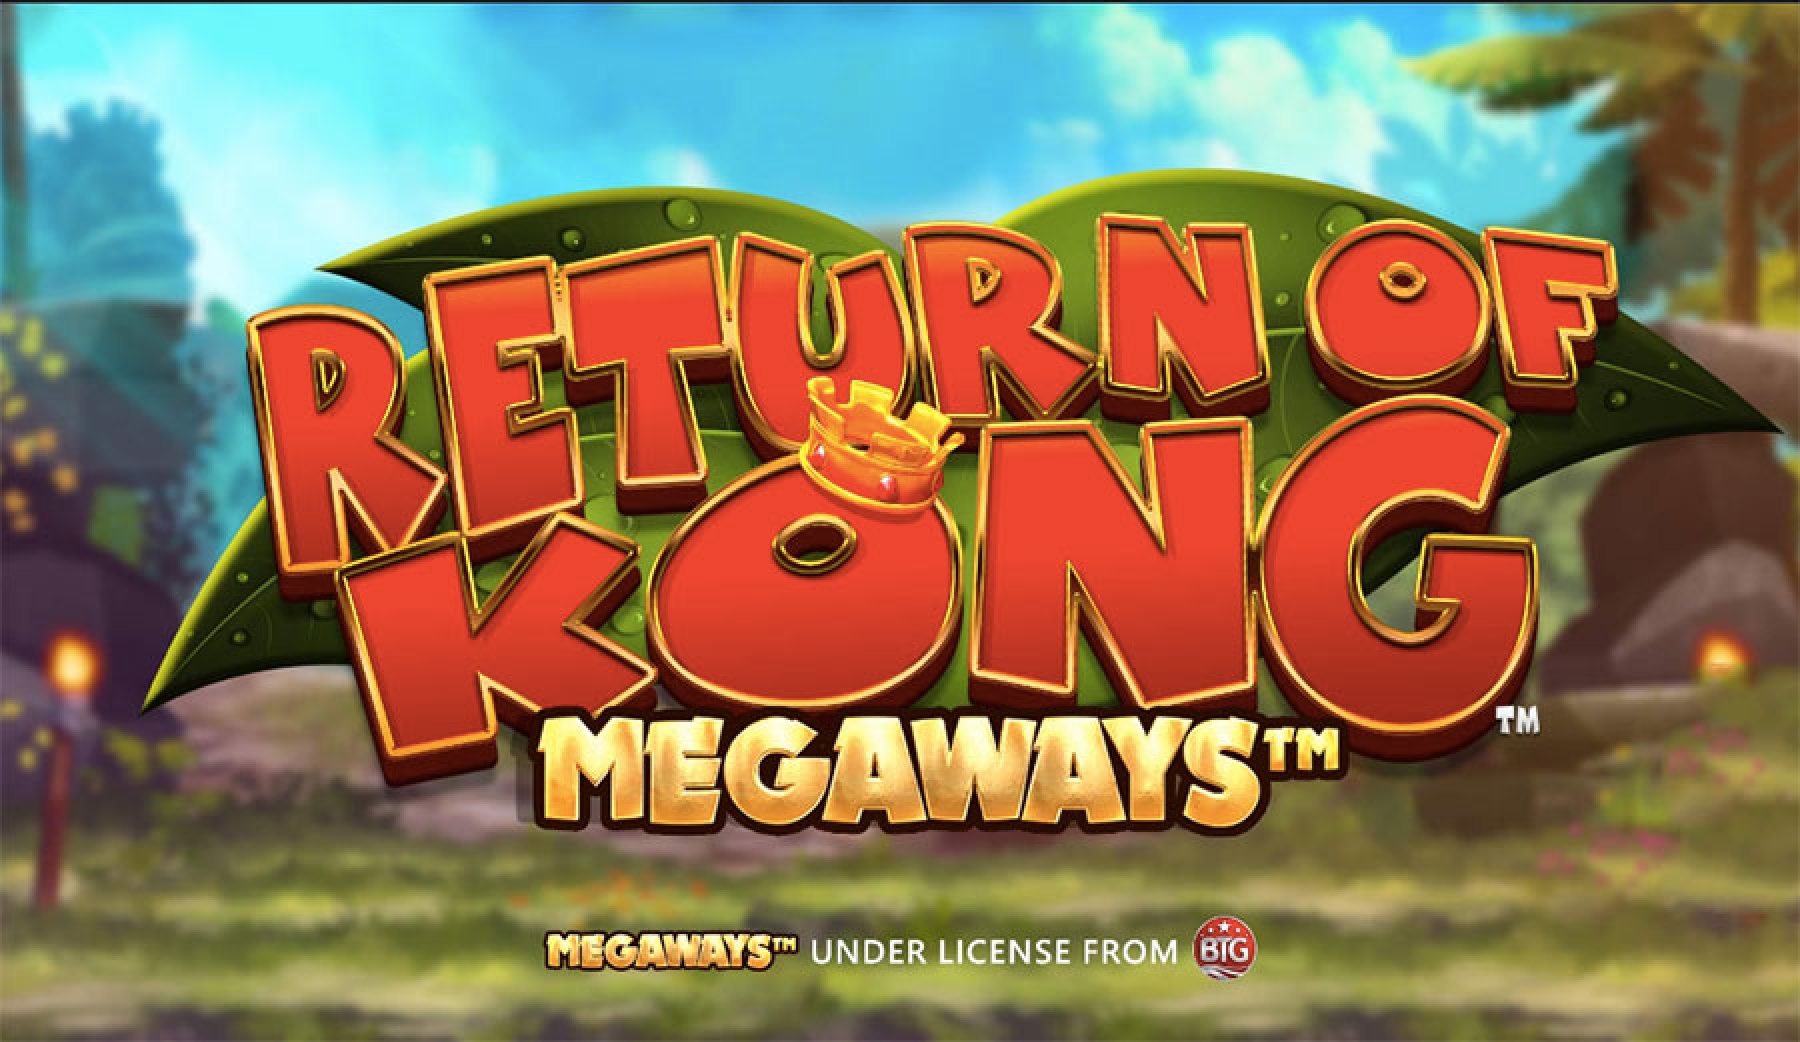 The Return of Kong Megaways Online Slot Demo Game by Blueprint Gaming